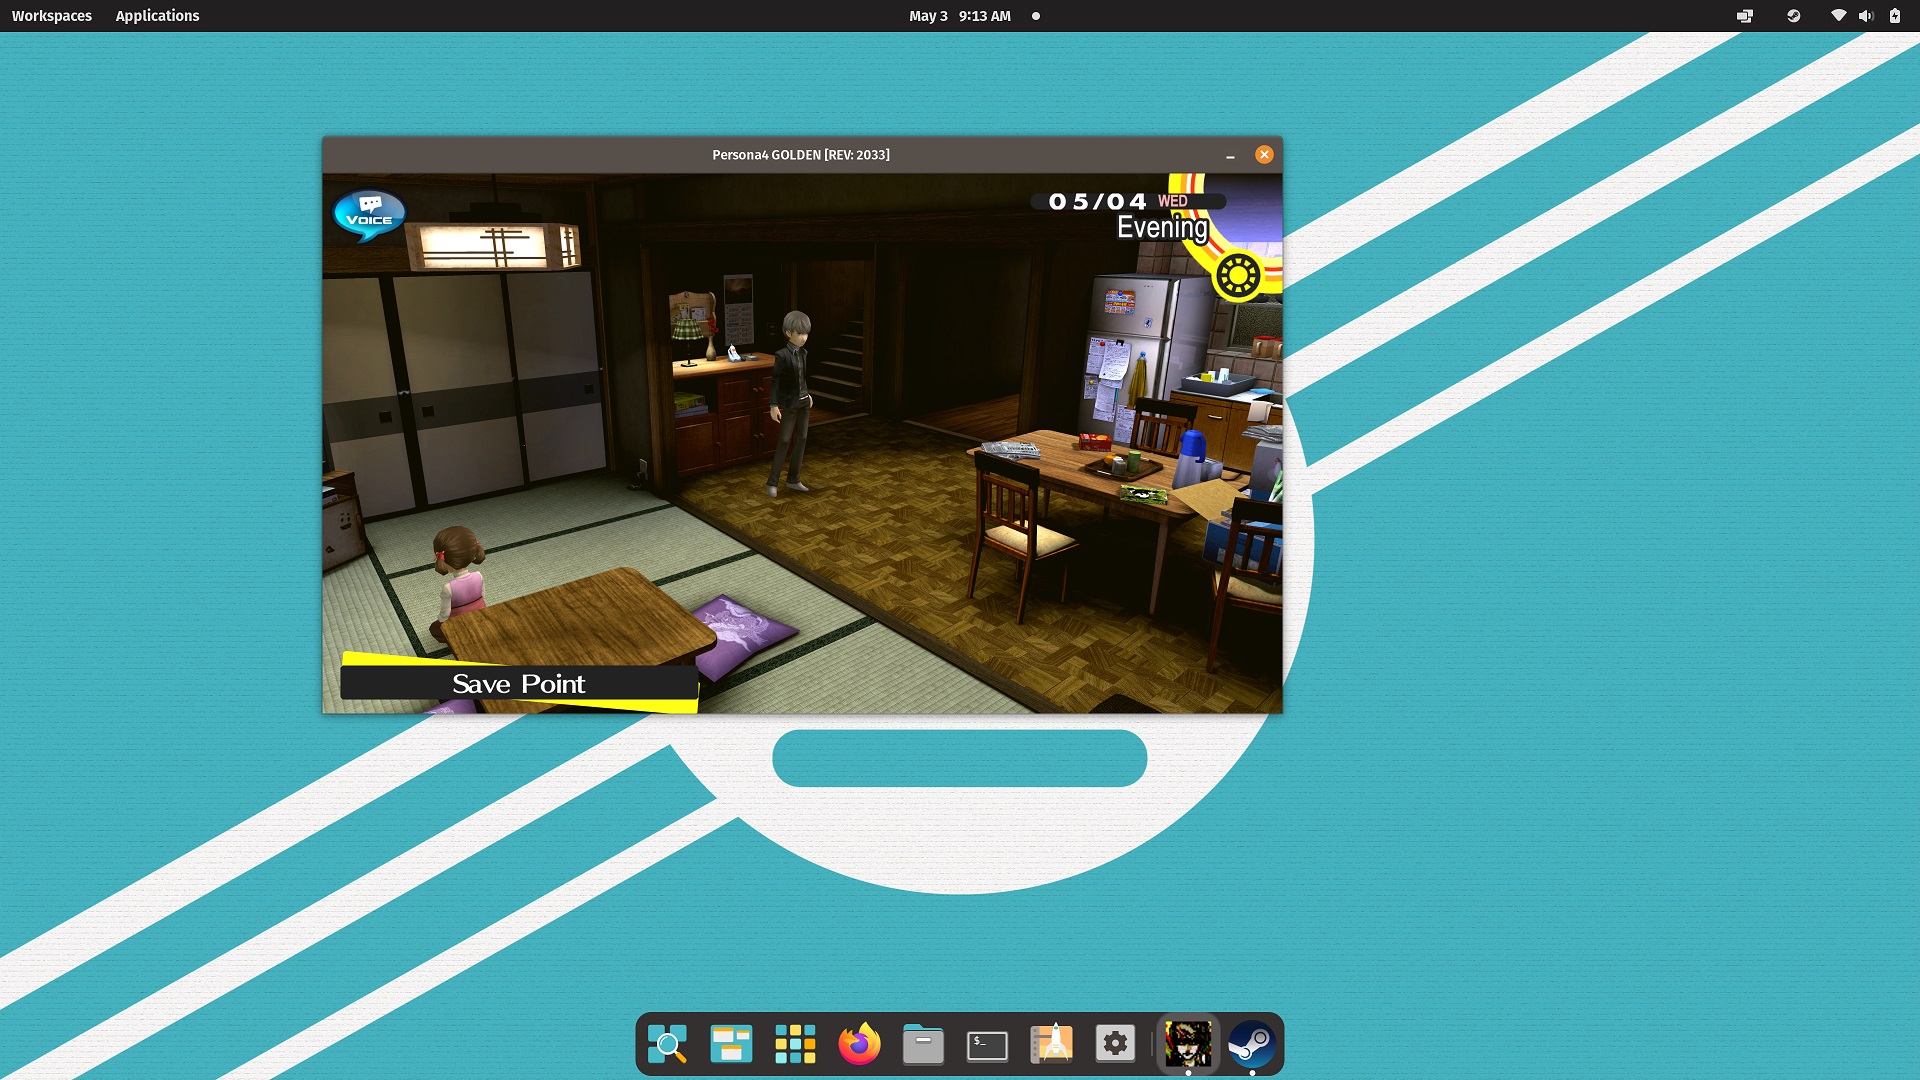 Persona 4 Golden روی لینوکس اجرا می شود.